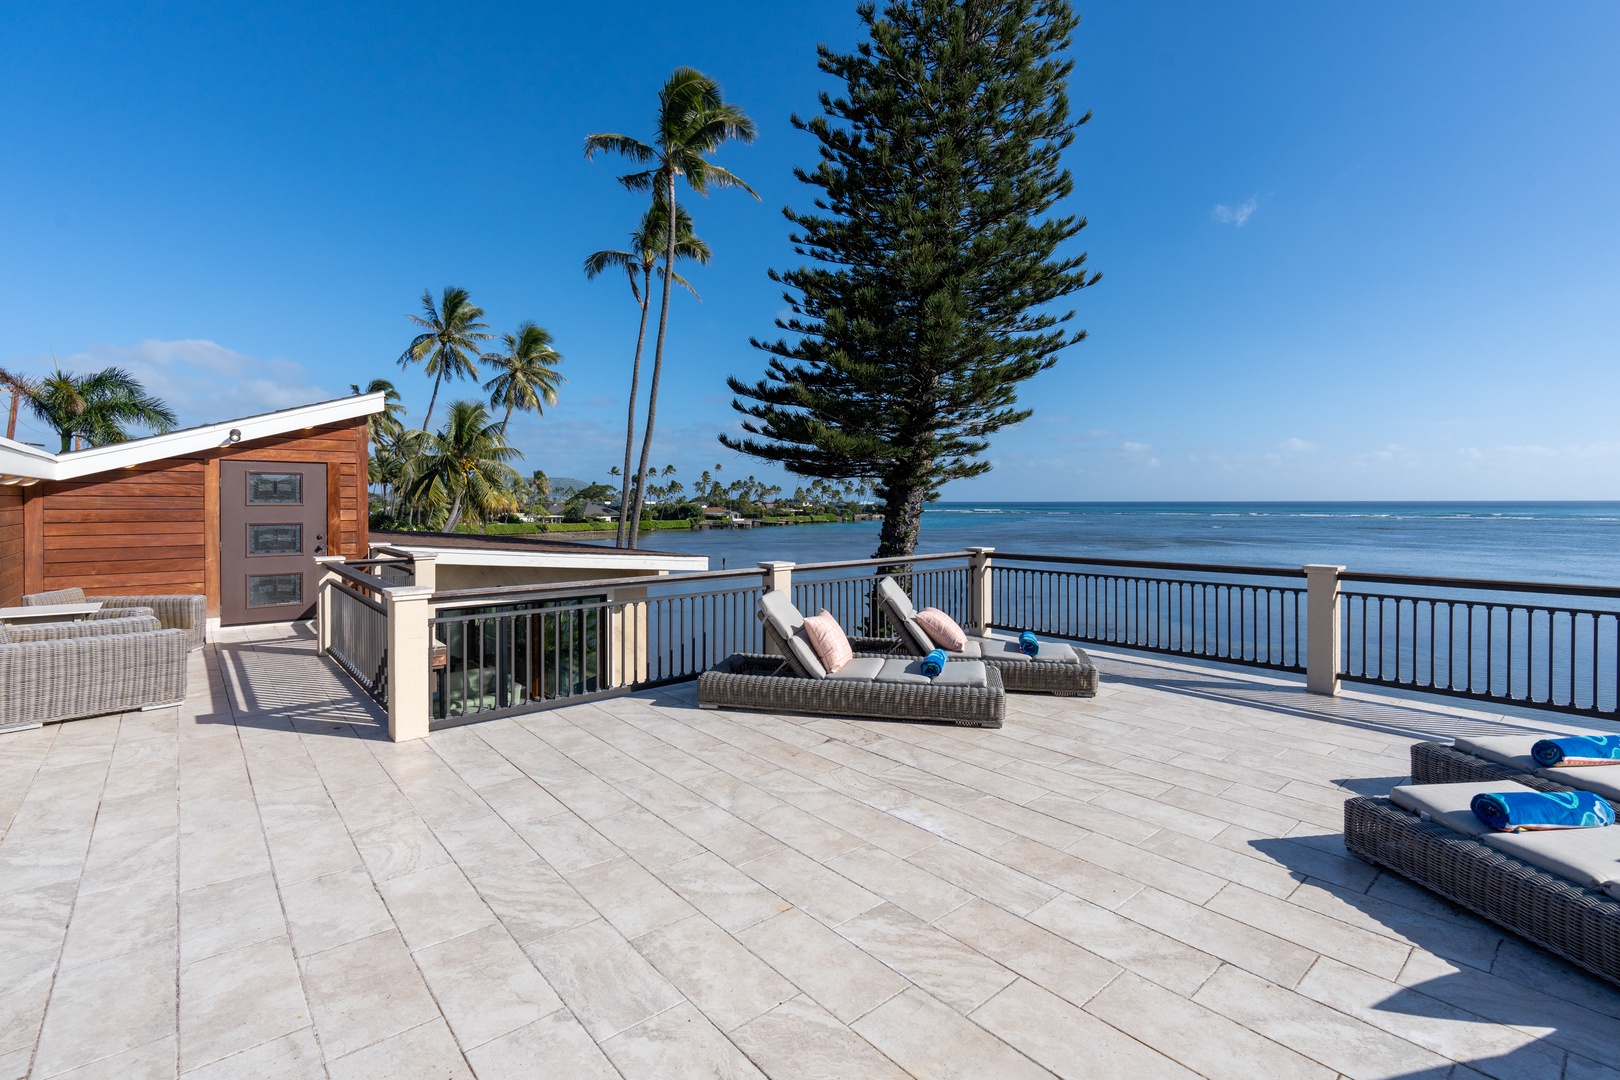 Honolulu Vacation Rentals, Wailupe Seaside - Up for sunbathing?